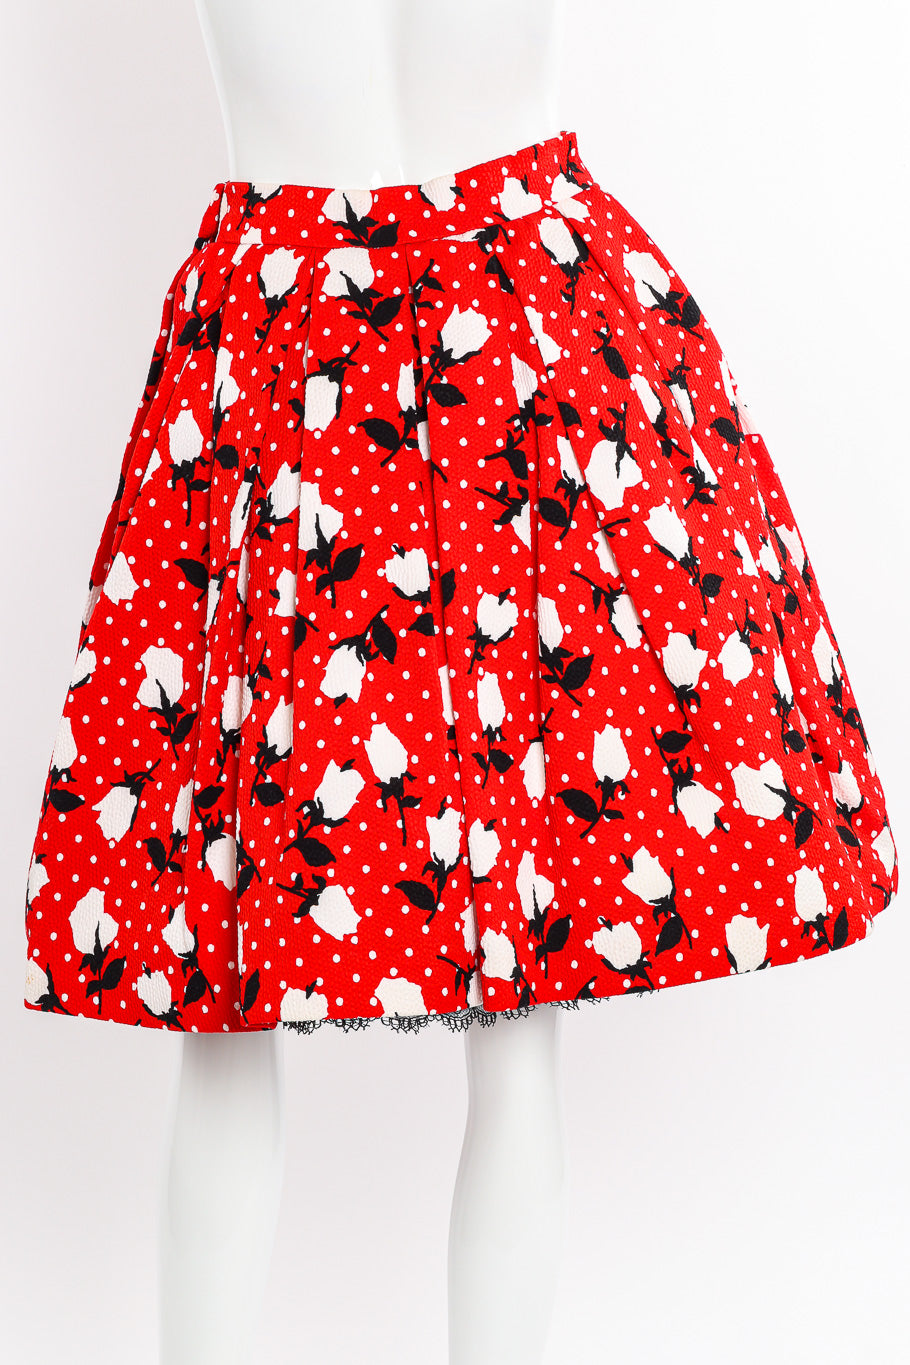 Floral dot full skirt by Christian La Croix on mannequin back @recessla